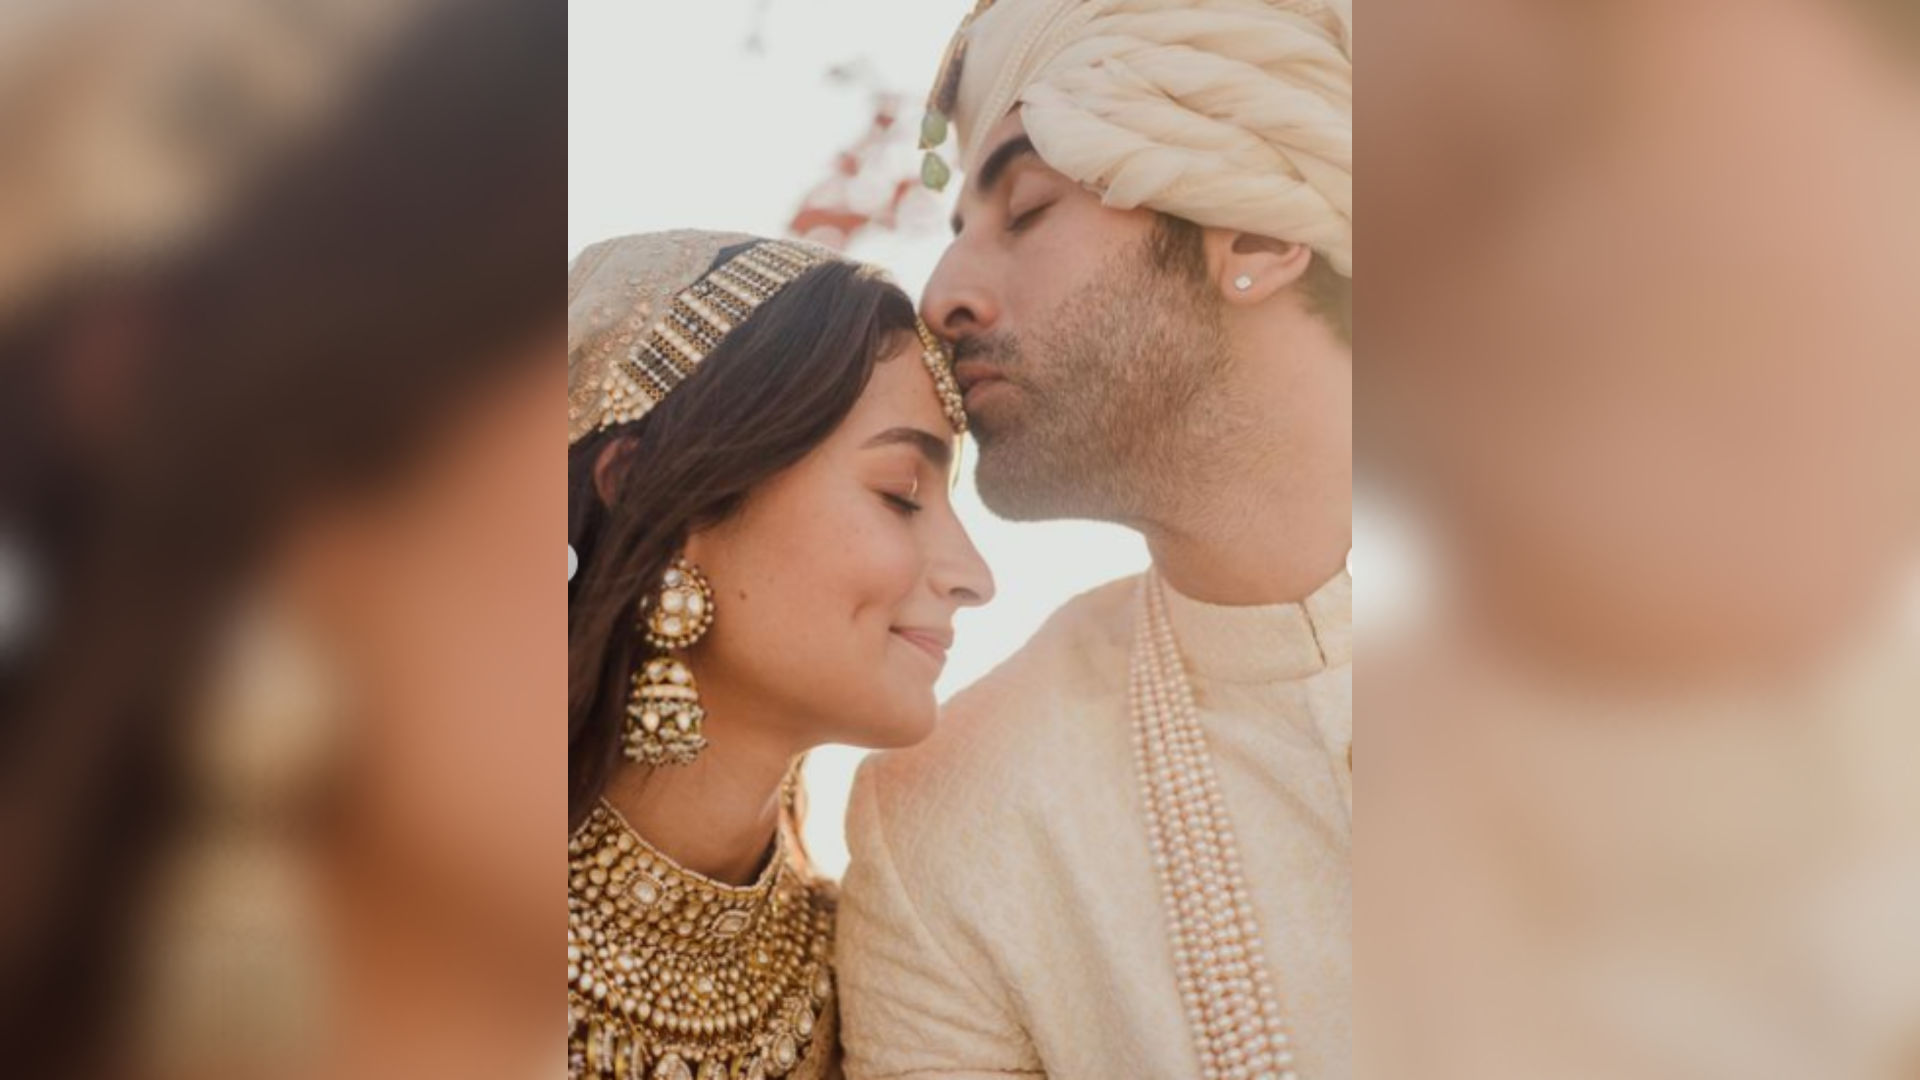 Mahesh Bhatt inscribes Alia and Ranbir’s name on palm, calls wedding ‘fairytale’